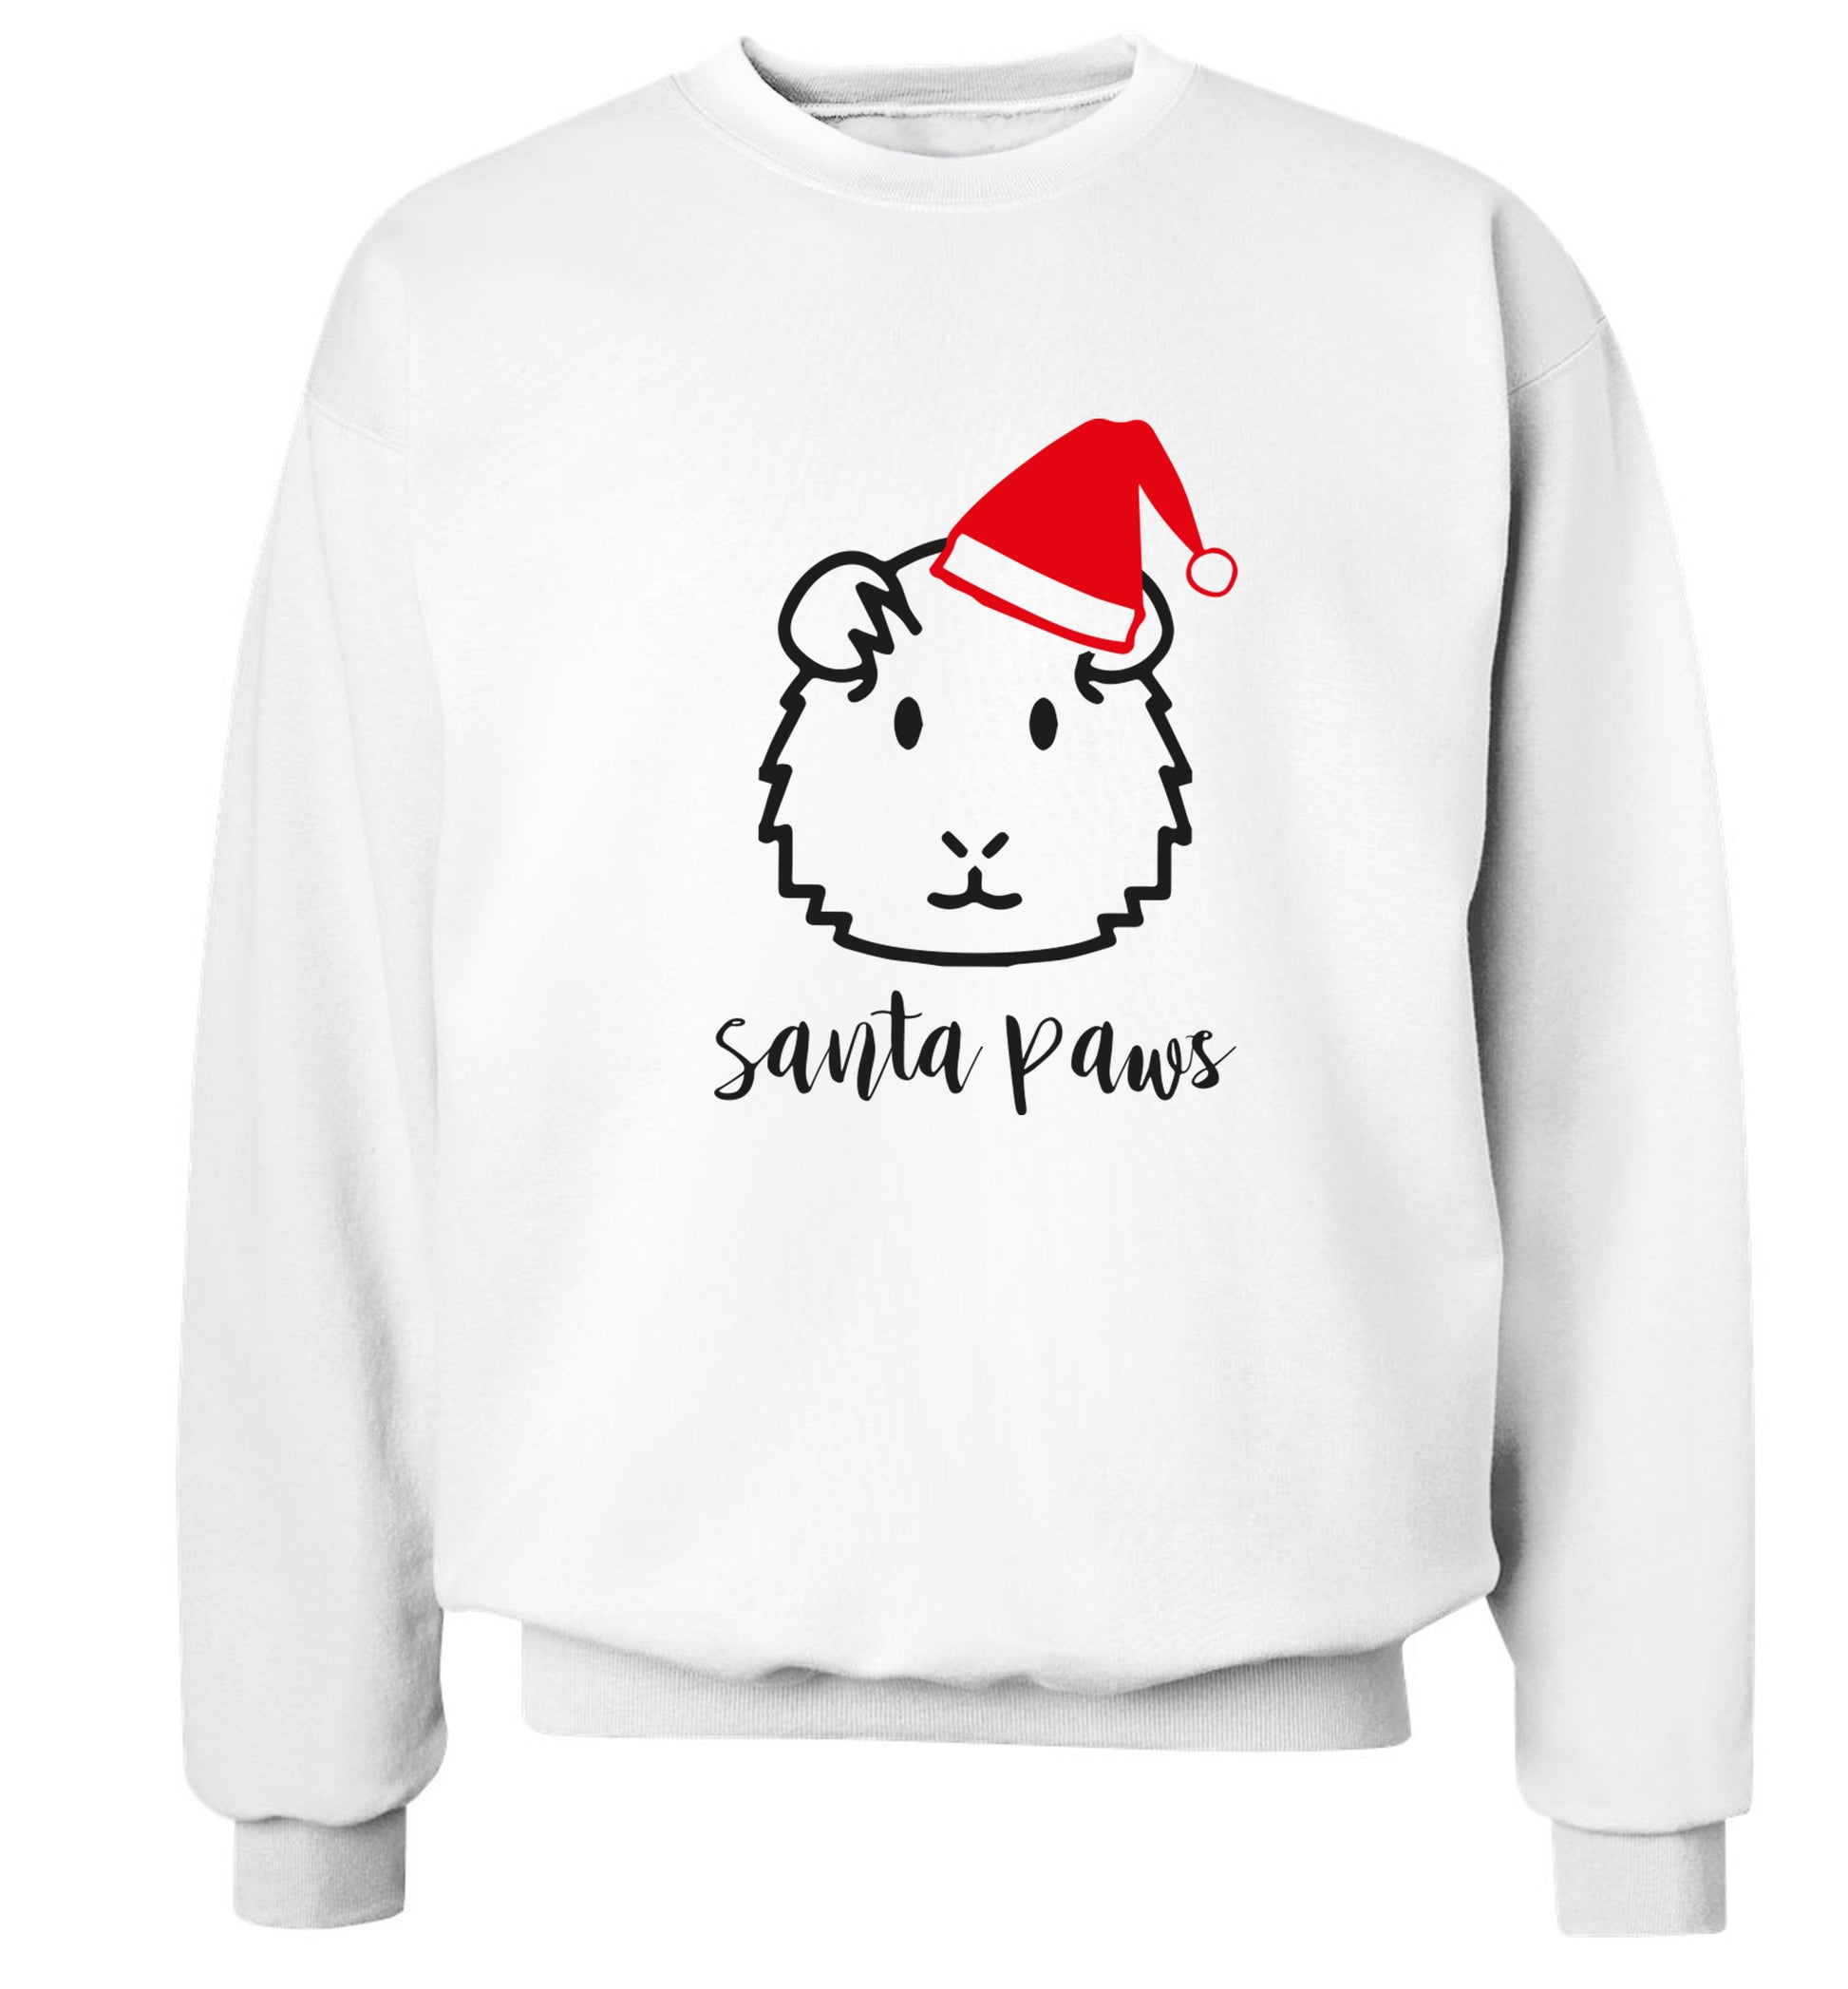 Guinea pig Santa Paws Adult's unisex white  sweater 2XL